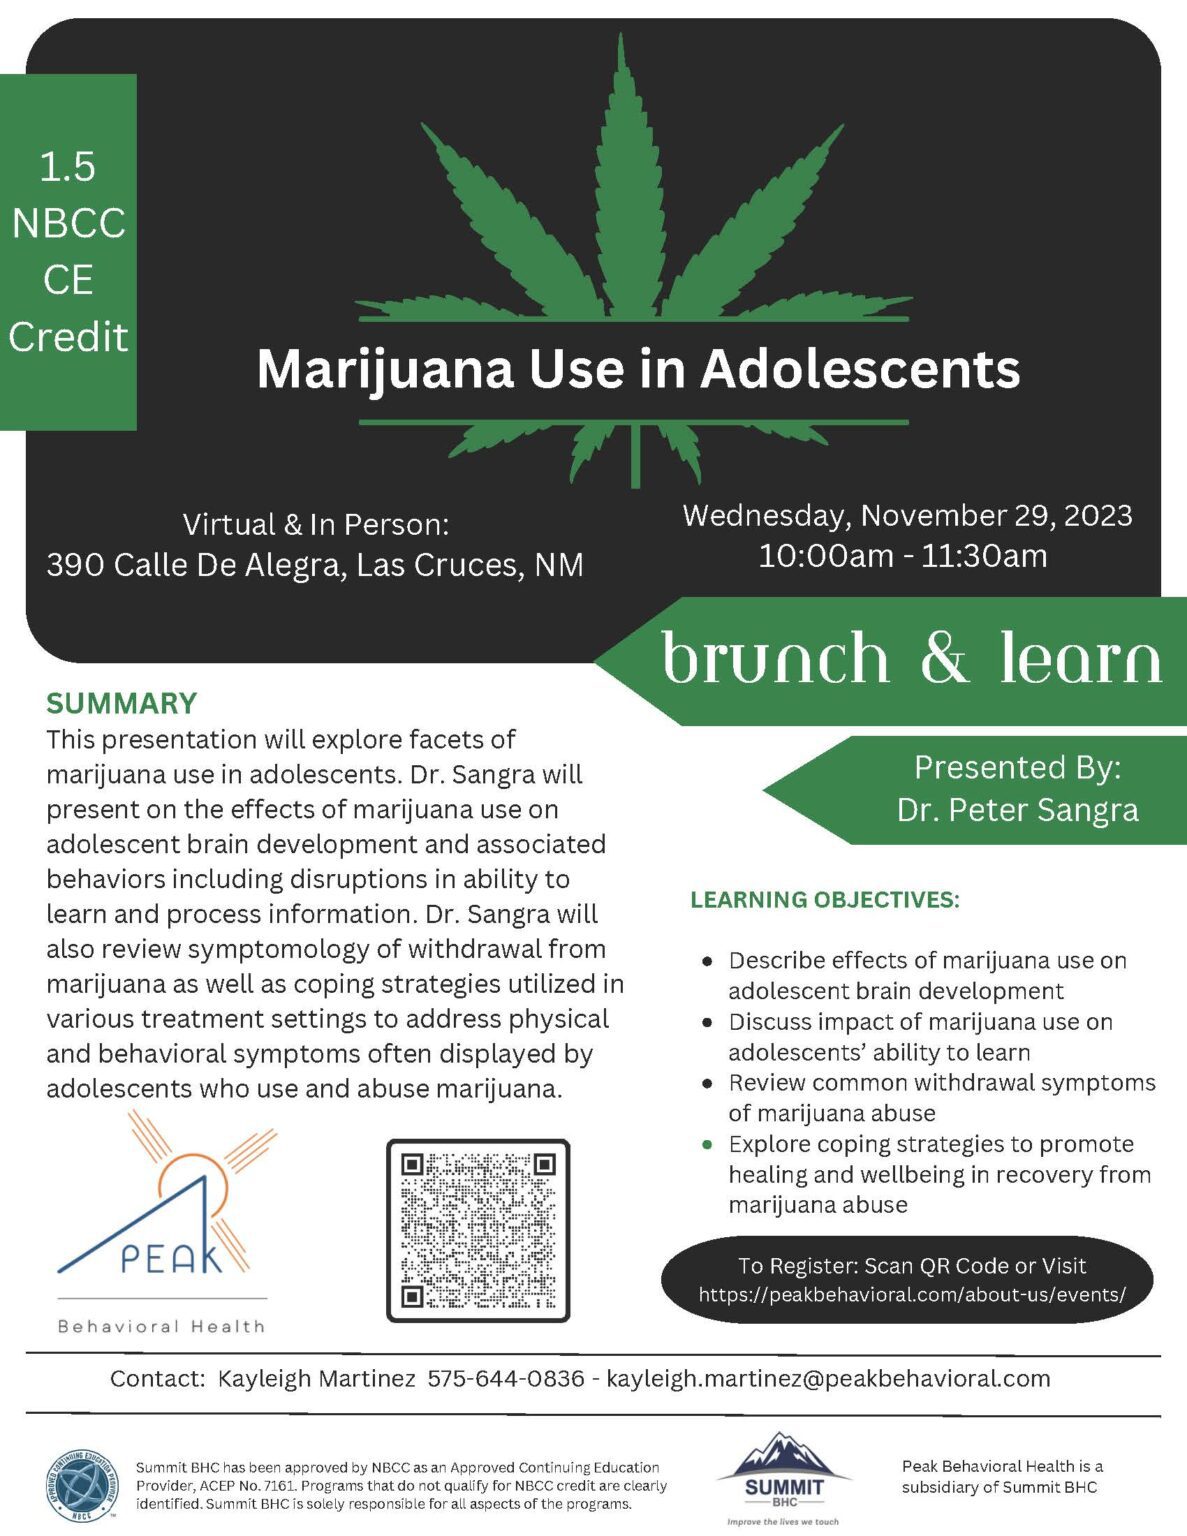 Marijuana Use in Adolescents: Brunch & Learn | Peak Behavioral Health ...